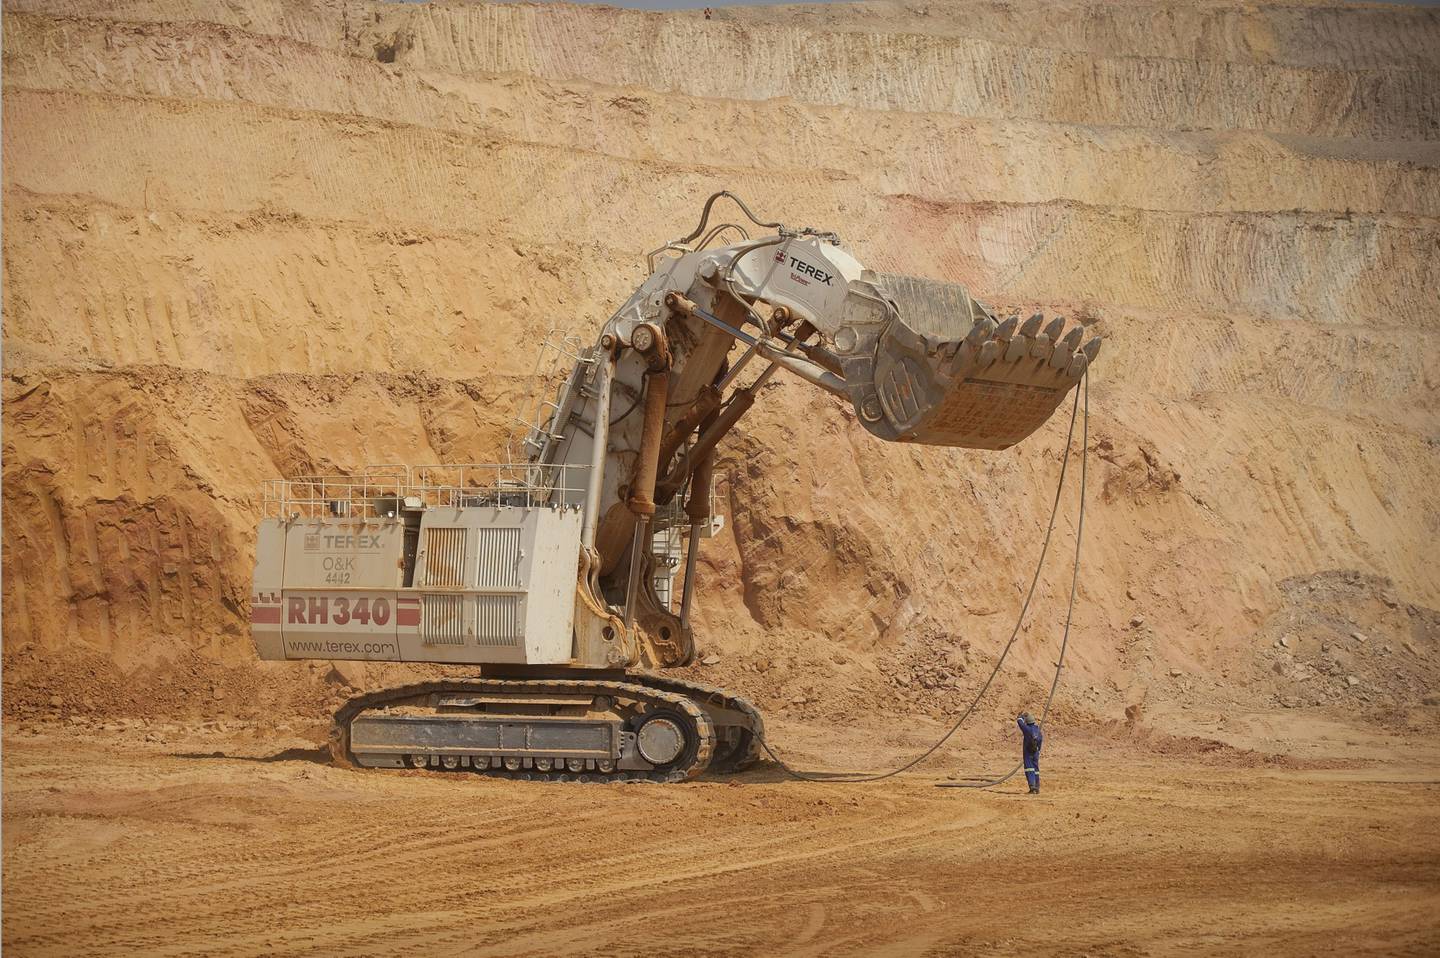 Glencore Plc ore operations in Kolwezi, Katanga province, Democratic Republic of Congo.